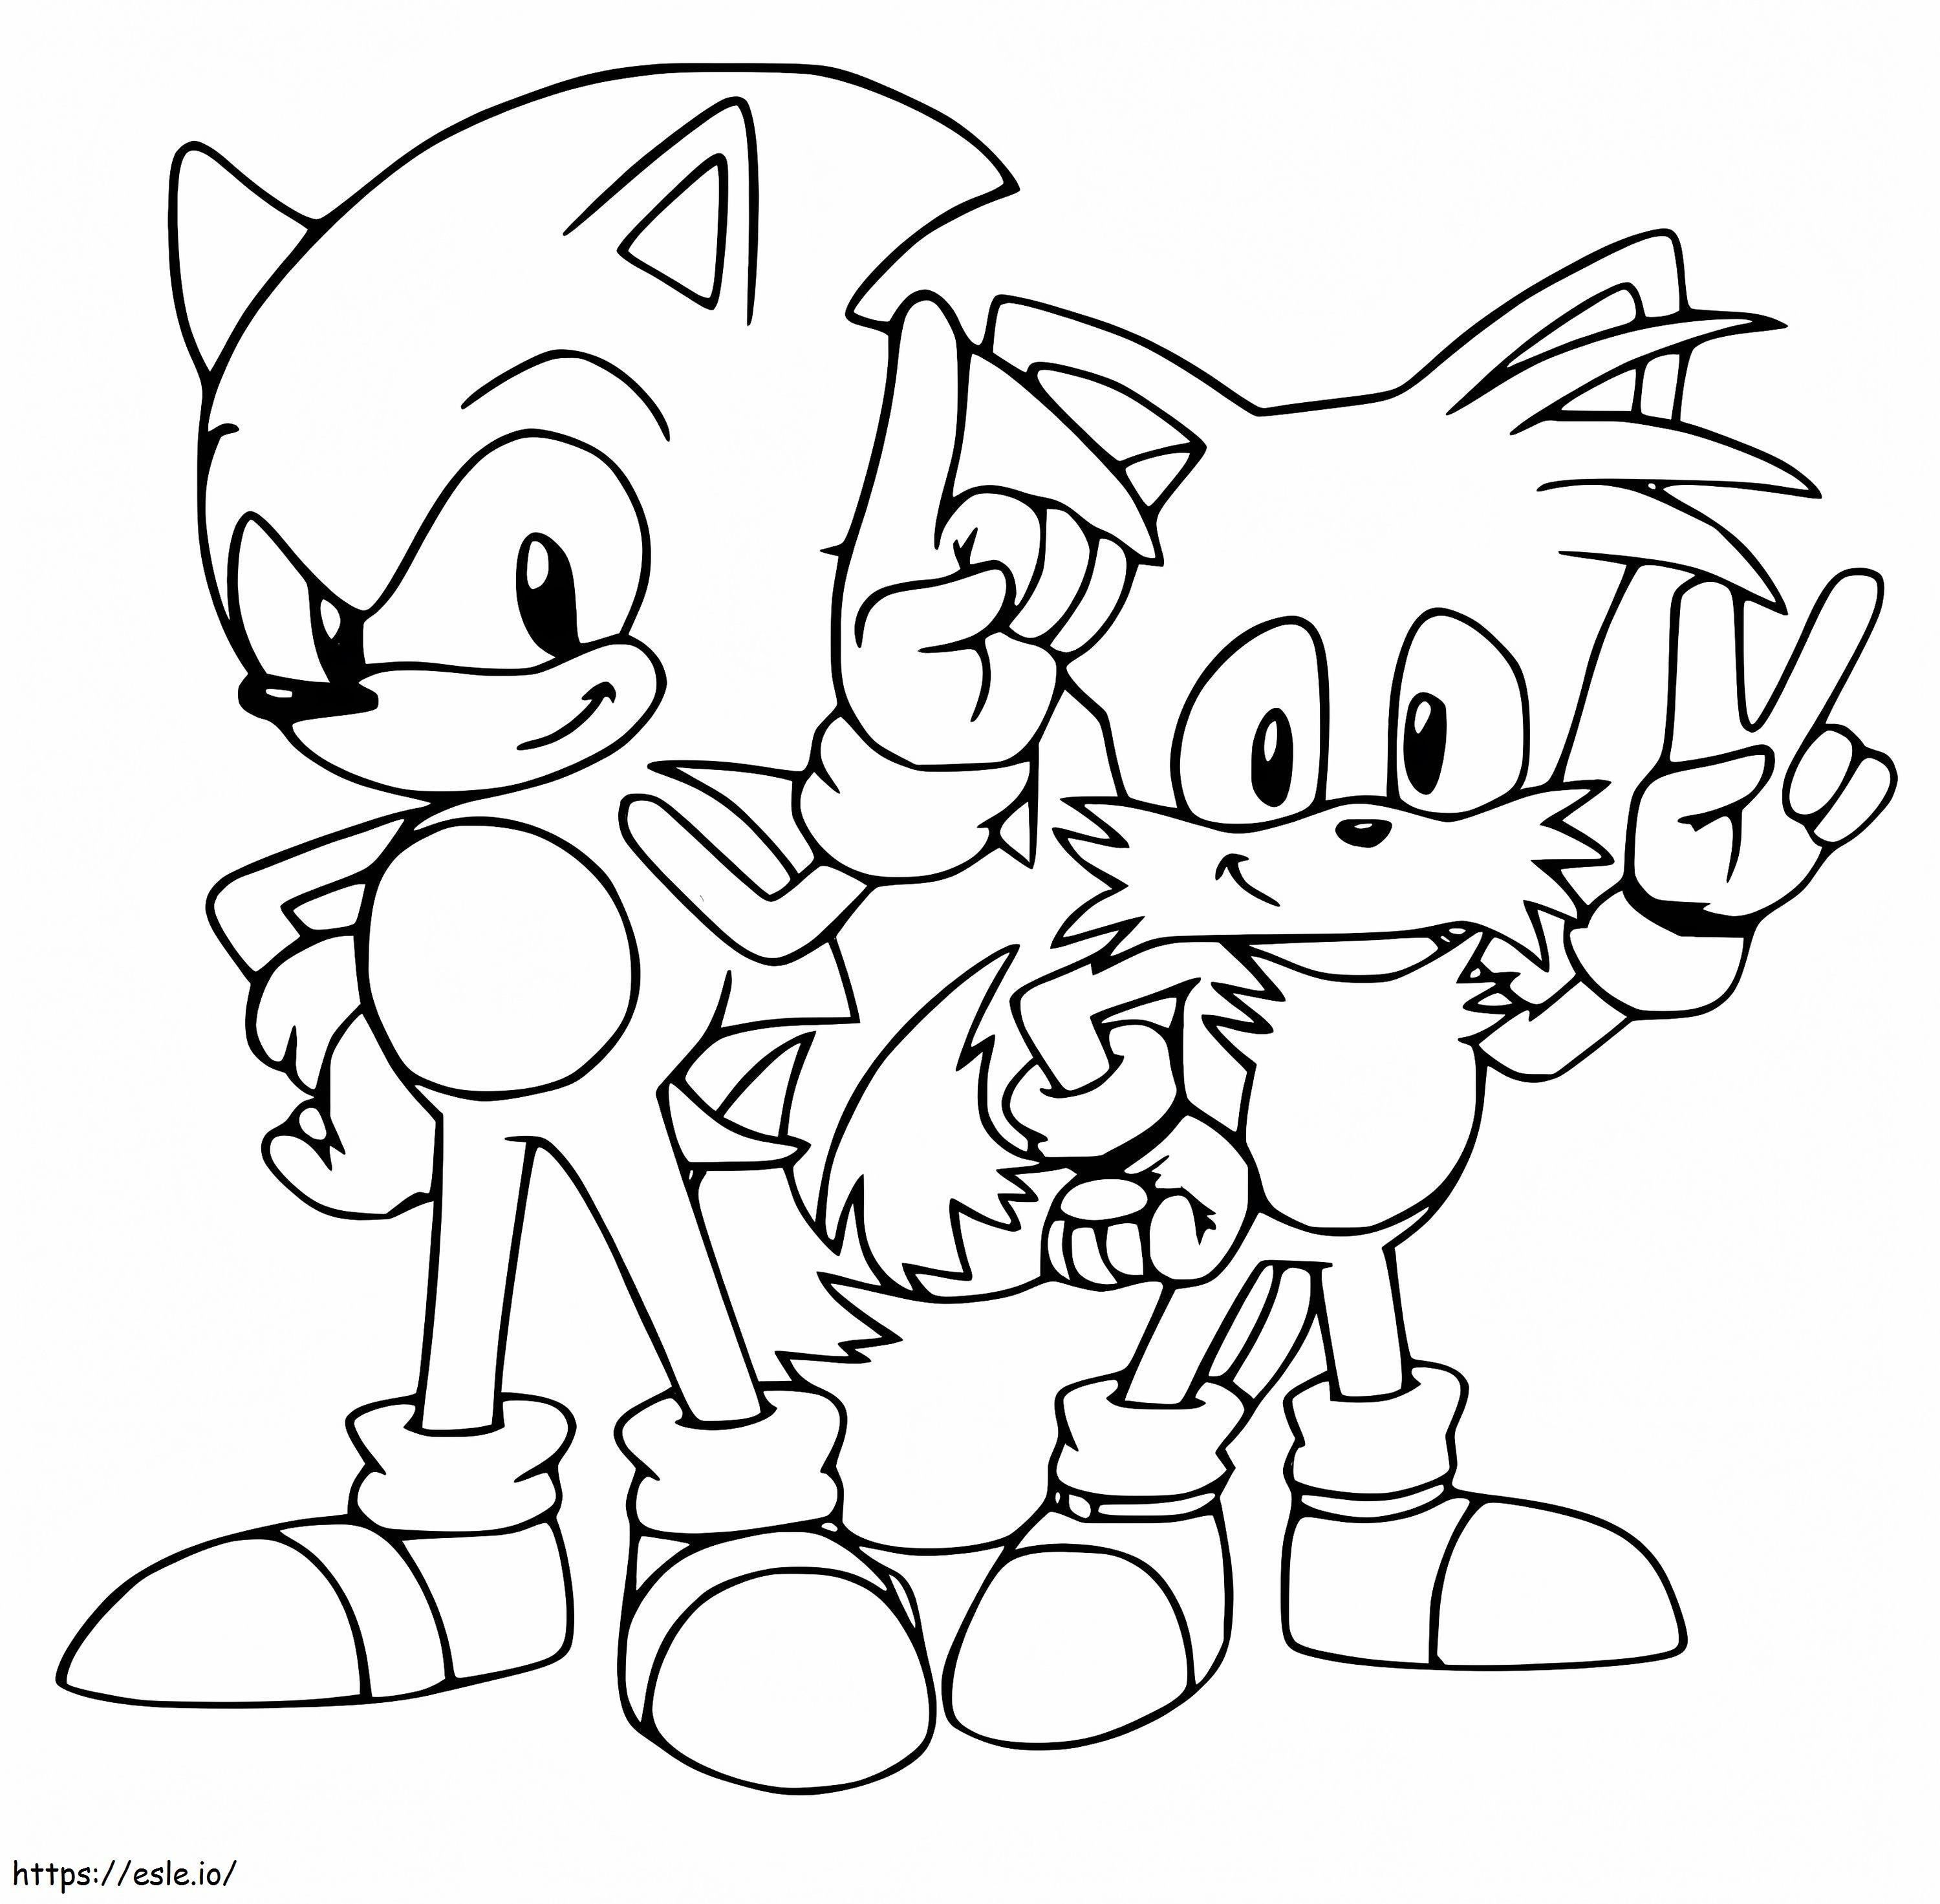 Sonic i Tails kolorowanka